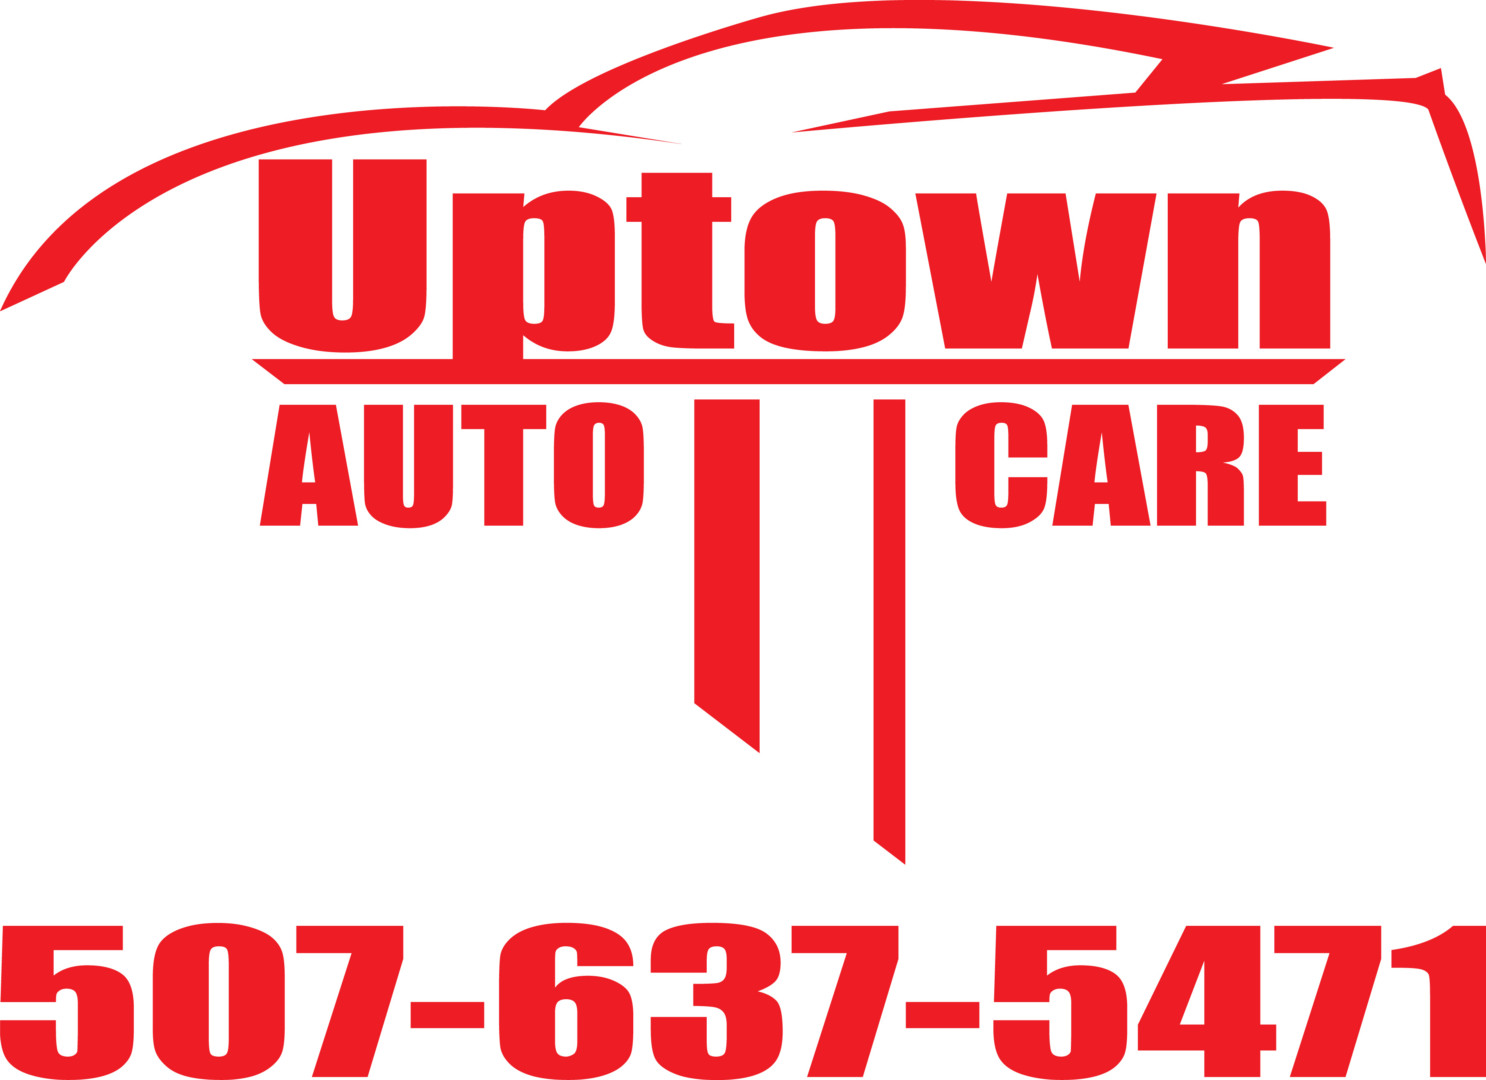 Uptown Auto Care